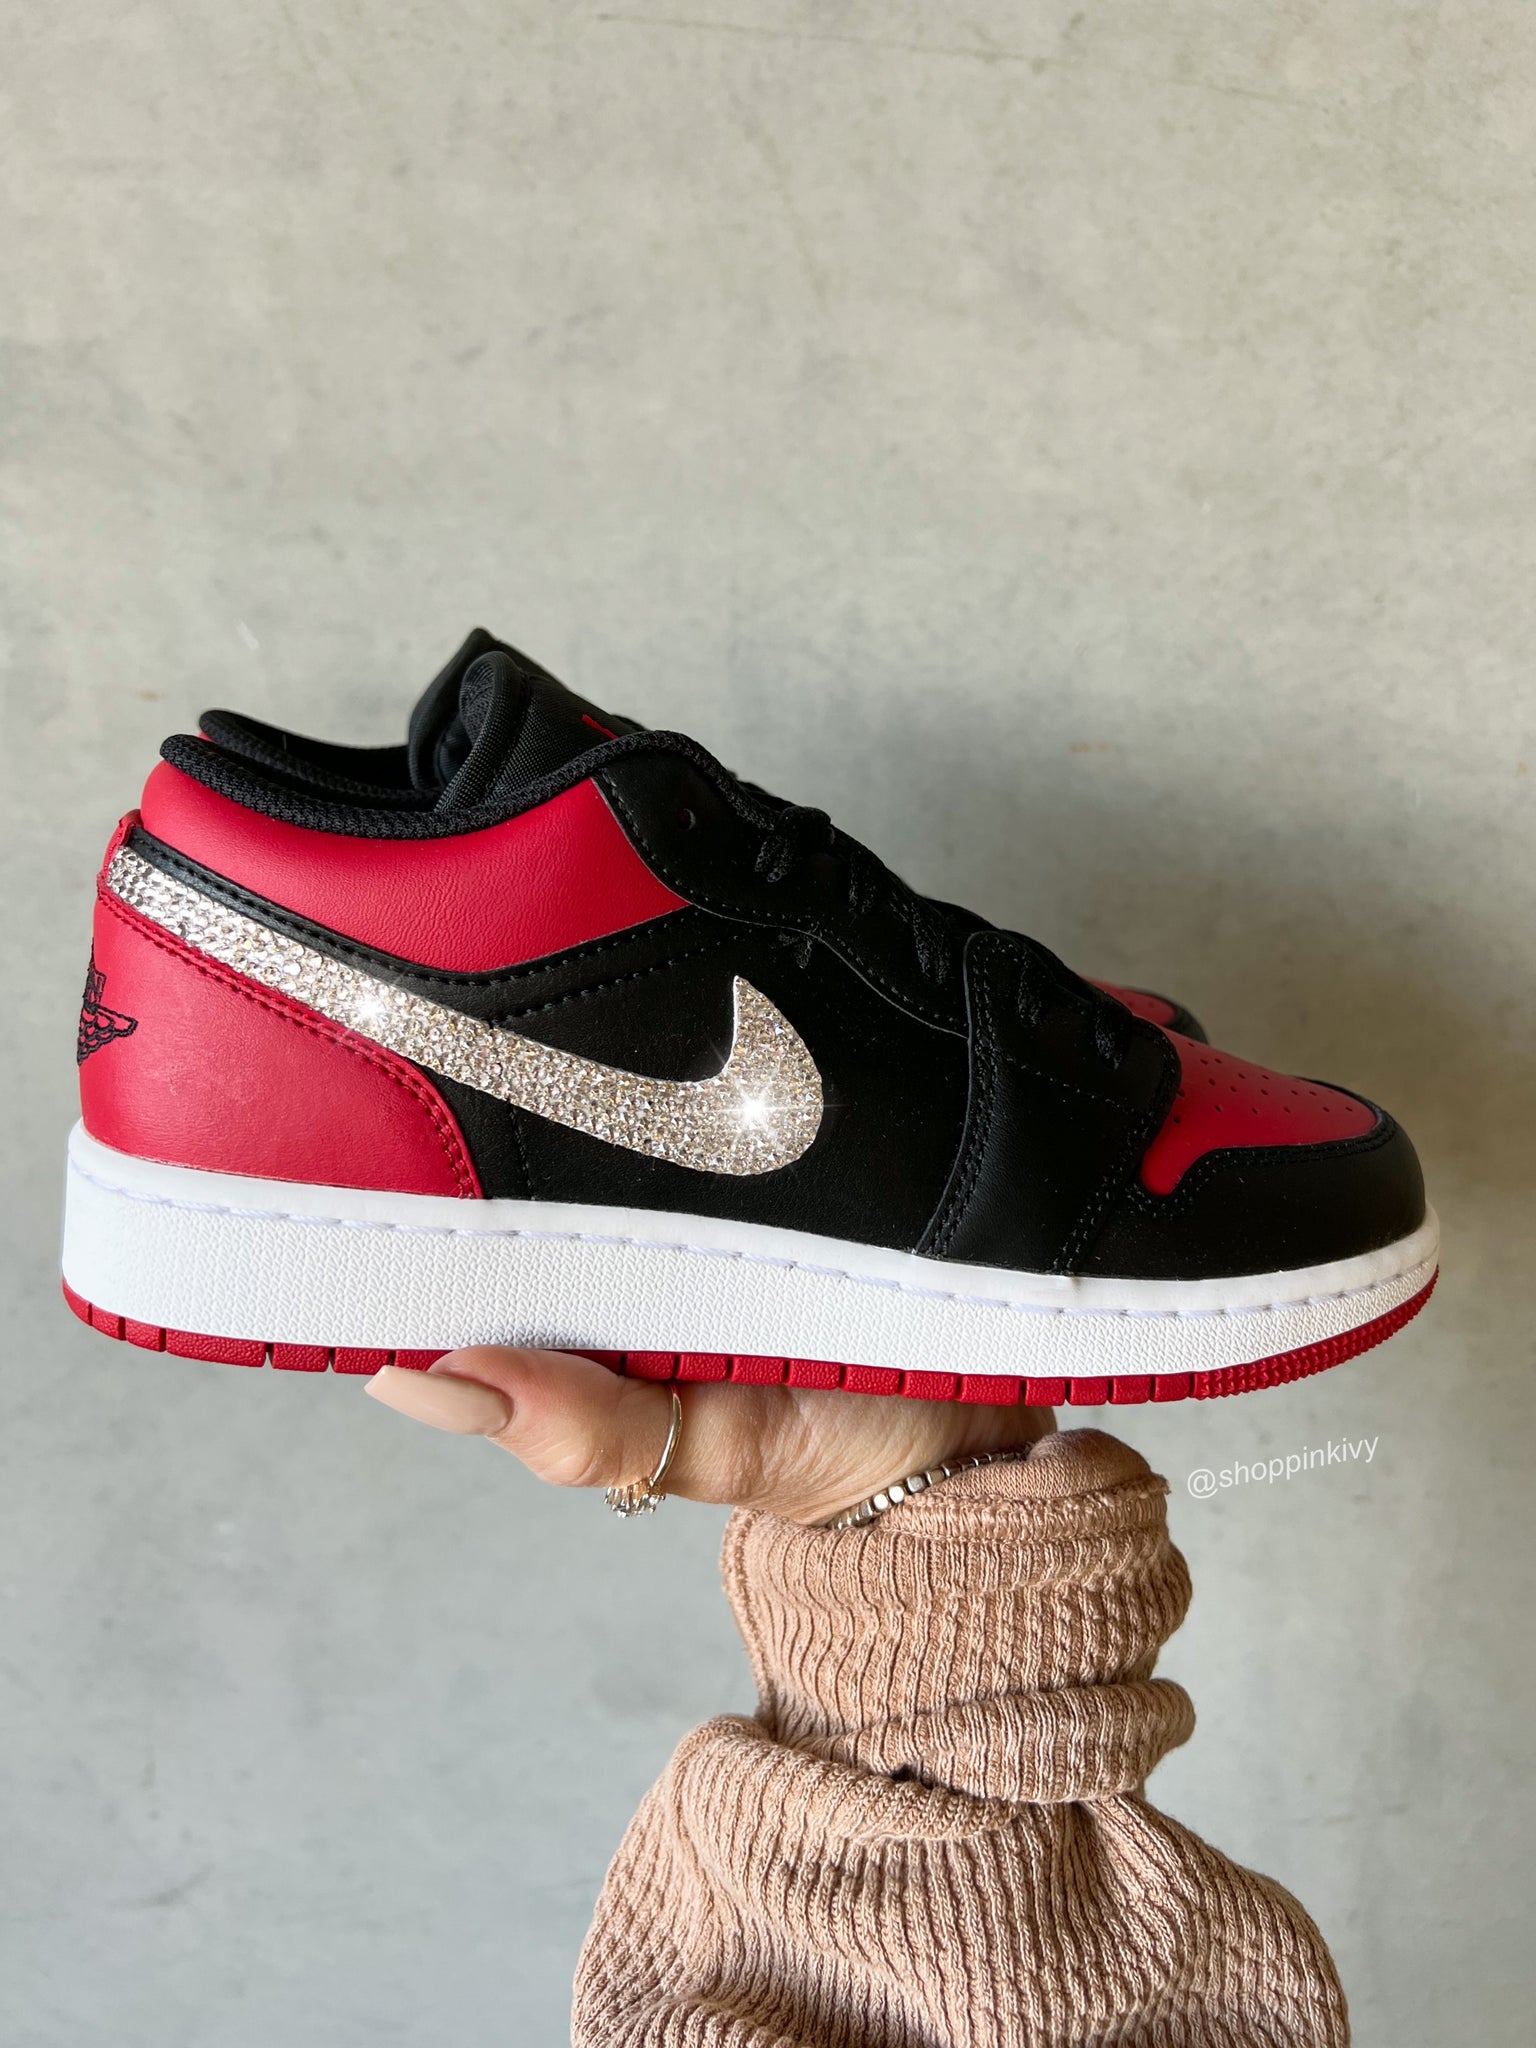 Air Jordan 1 low sneakers in black and gym red